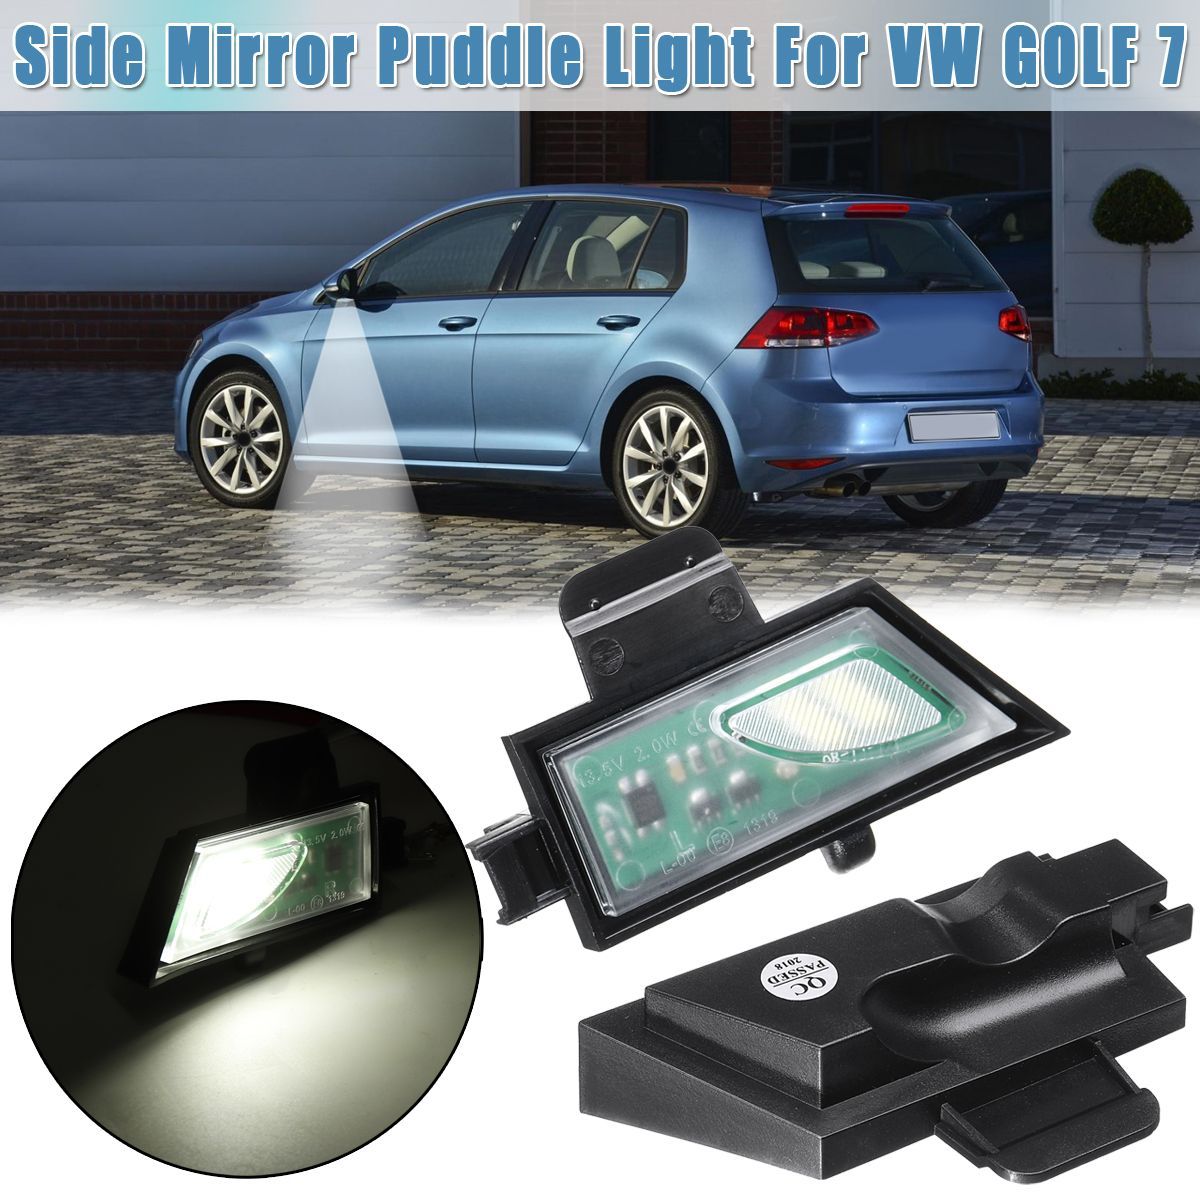 2Pcs-Car-Side-Under-Mirror-Light-Puddle-Light-For-VW-GOLF-7-1659858